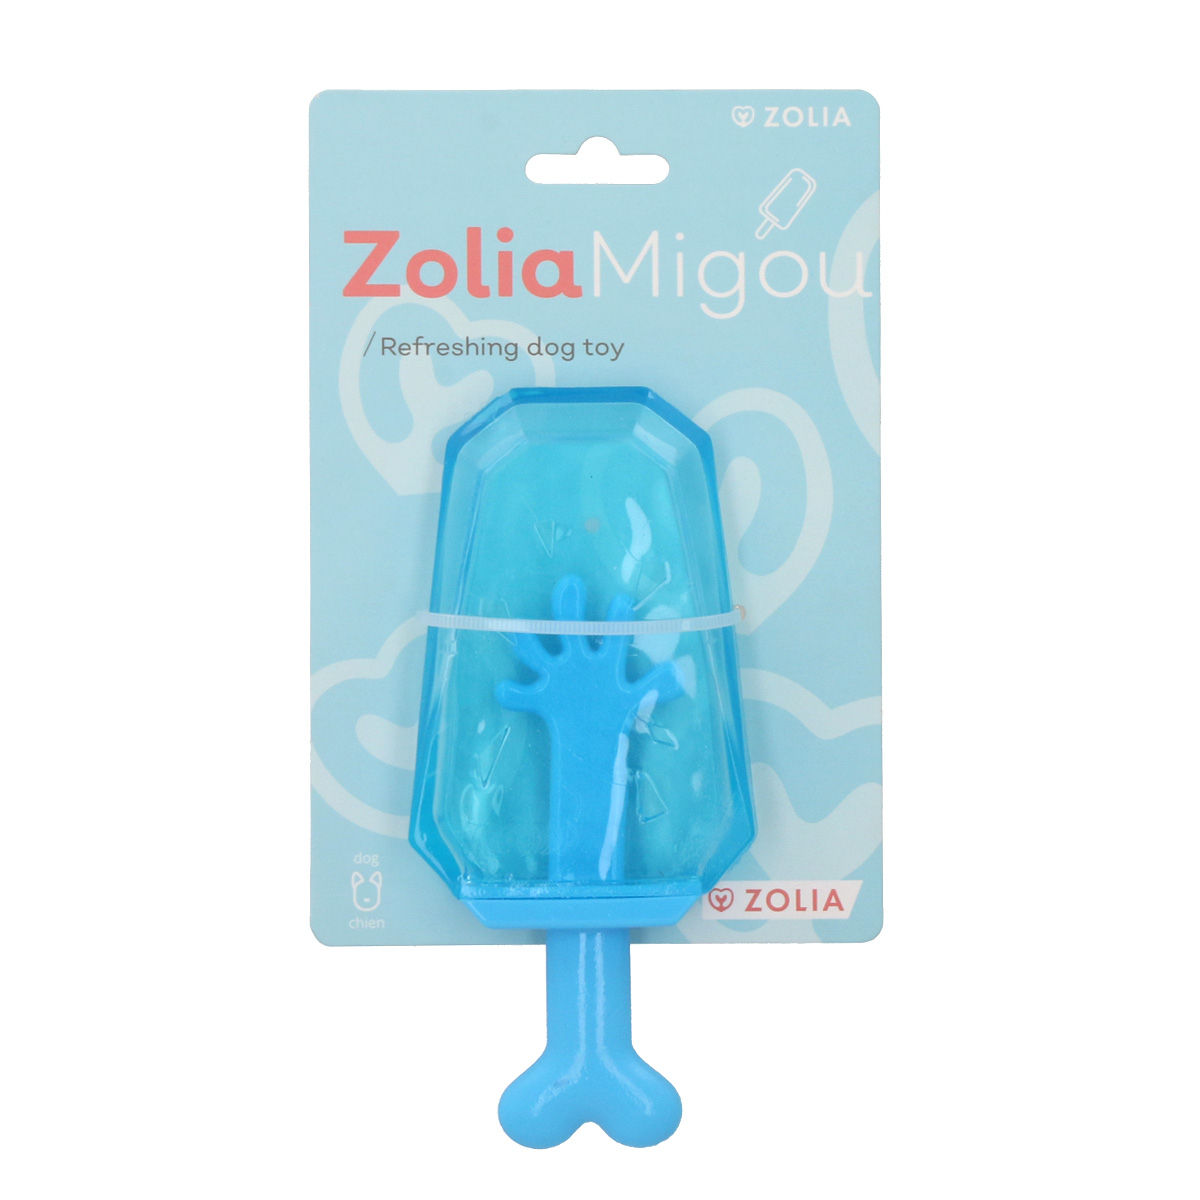 Kühlspielzeug für Hunde Zolia Migou